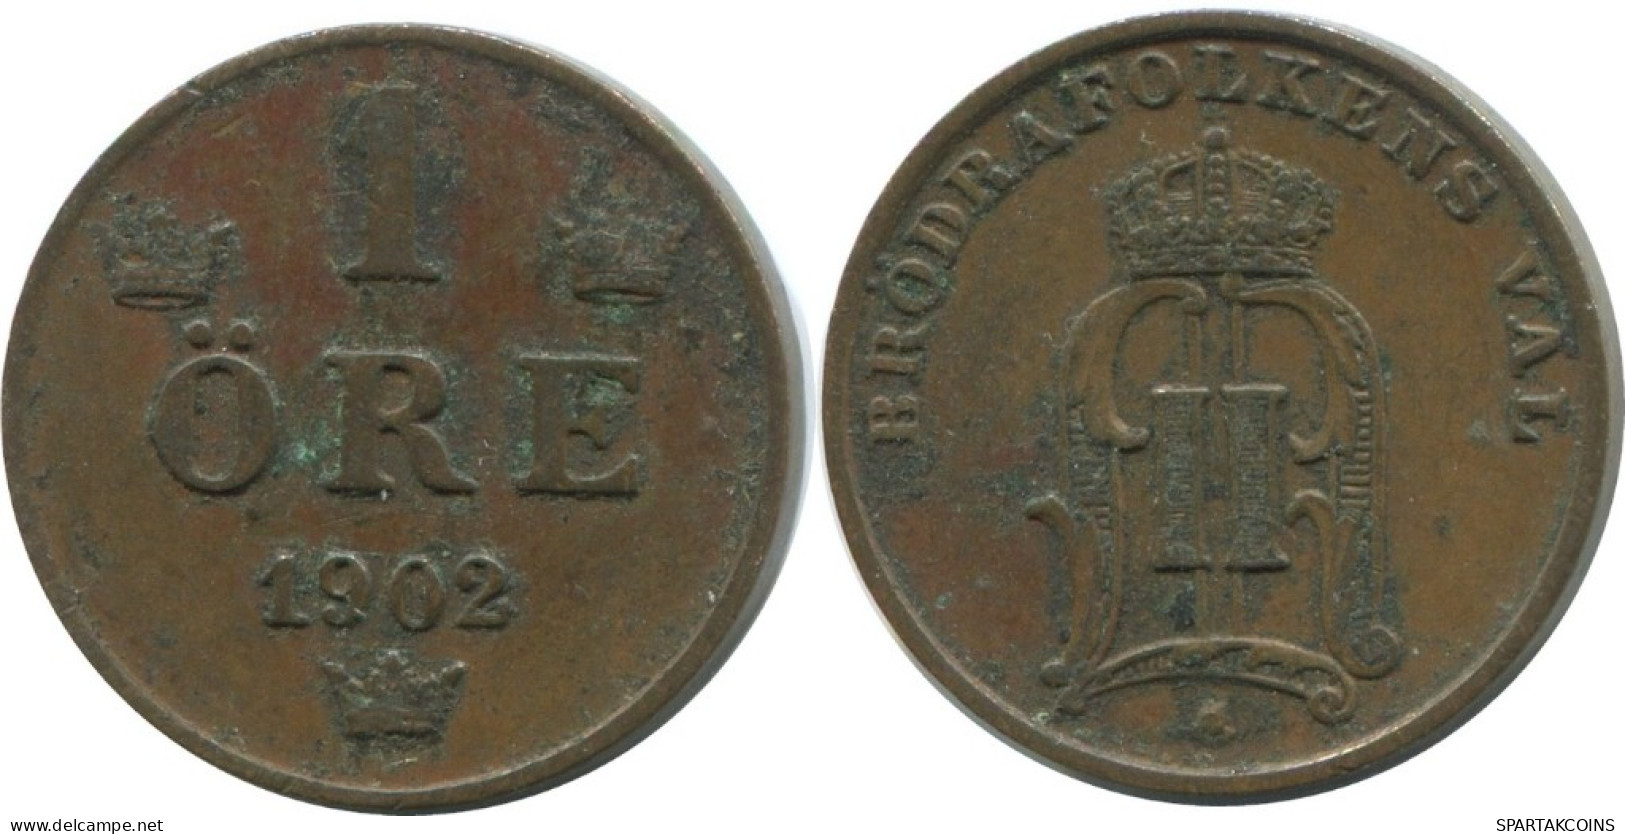 1 ORE 1902 SWEDEN Coin #AD411.2.U.A - Zweden